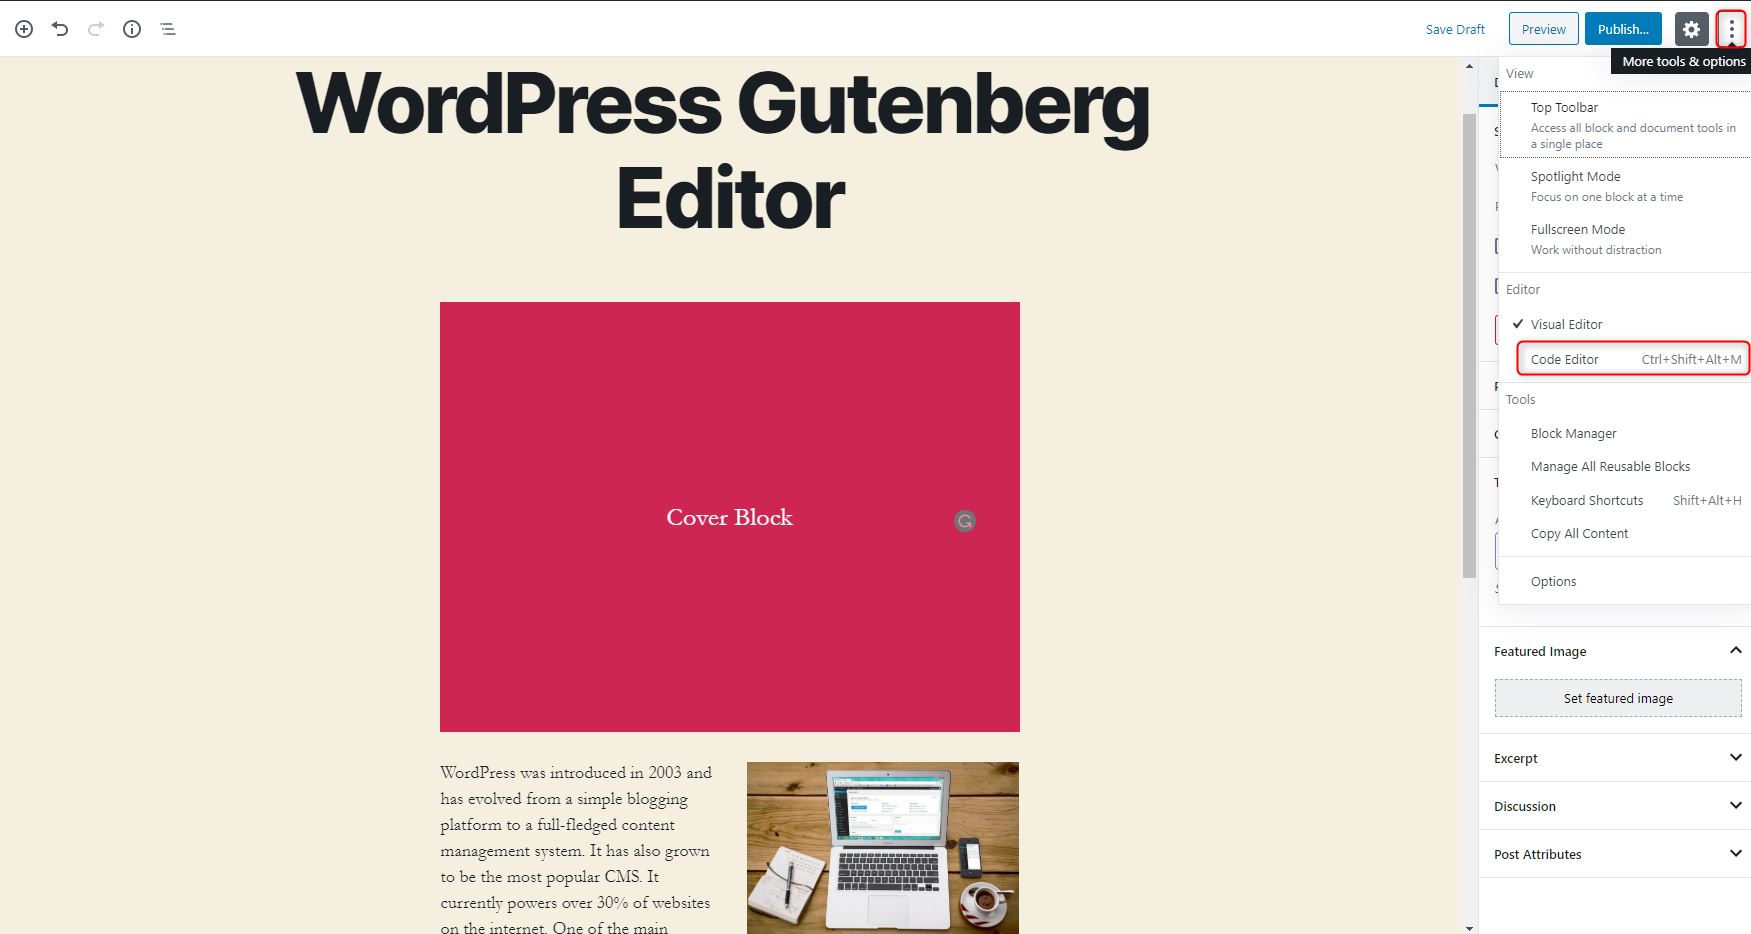 WordPress Gutenberg Editor - Switching to the code editor